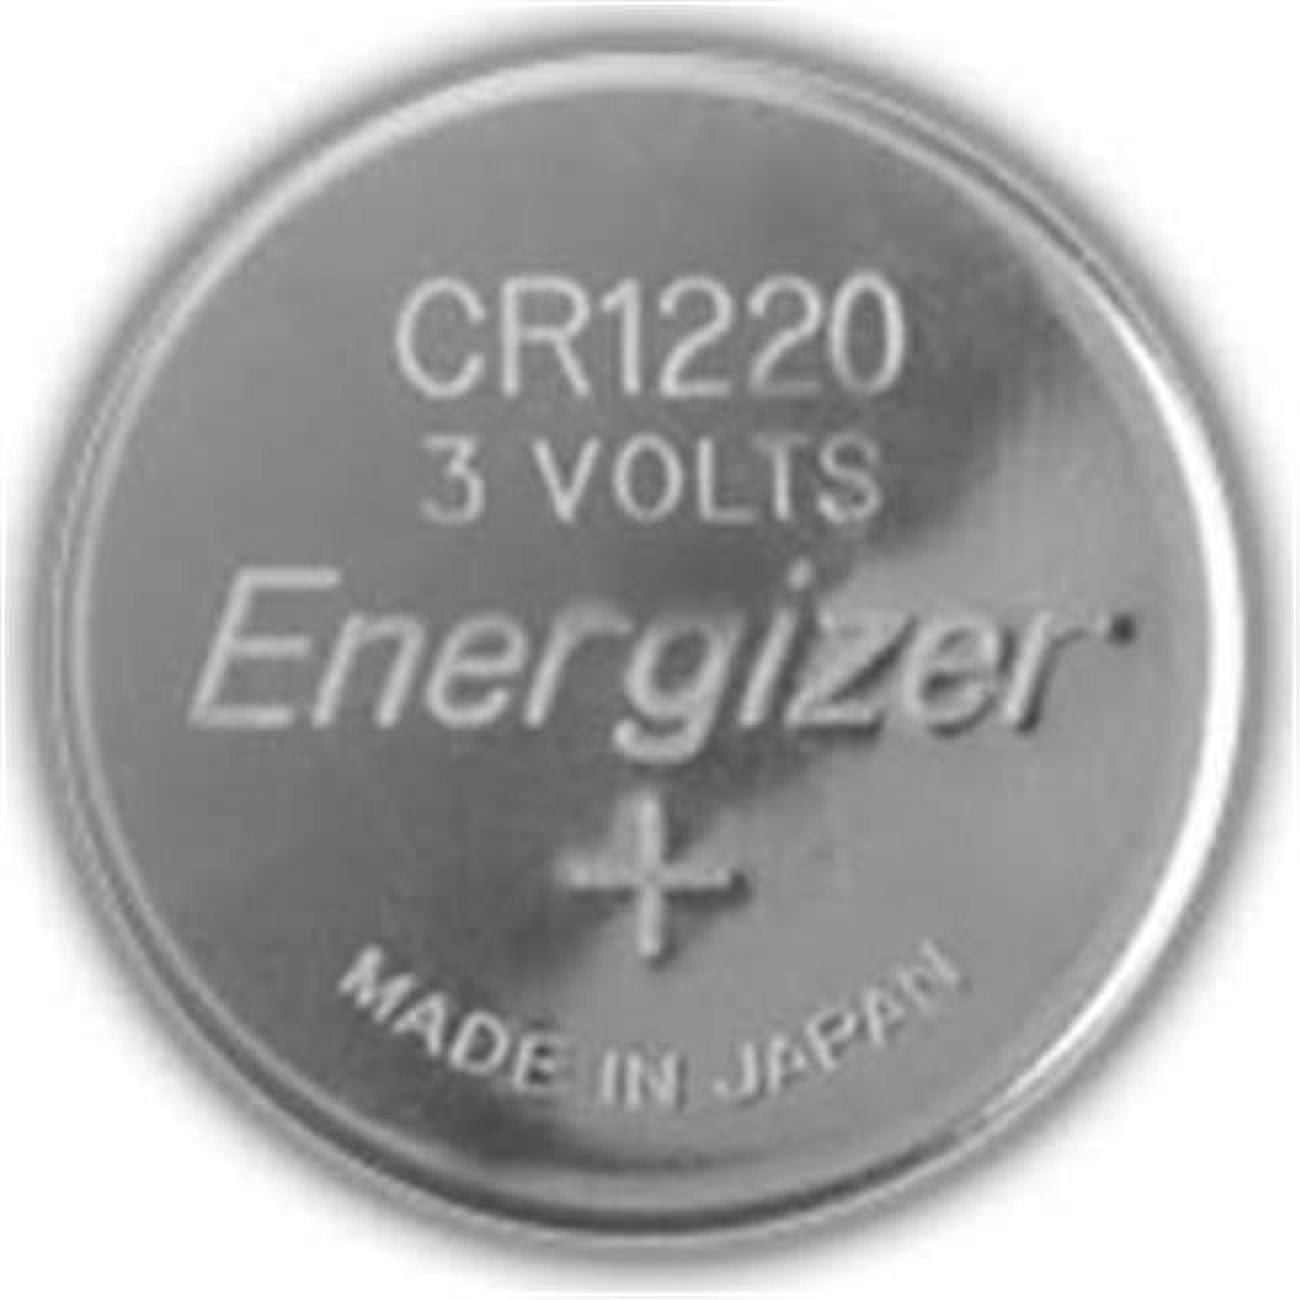 Pile bouton lithium CR 1220, 3 V type / tension CR 1220, 3 V capacité 38  mAh Contenu 1 pièce : : High-Tech